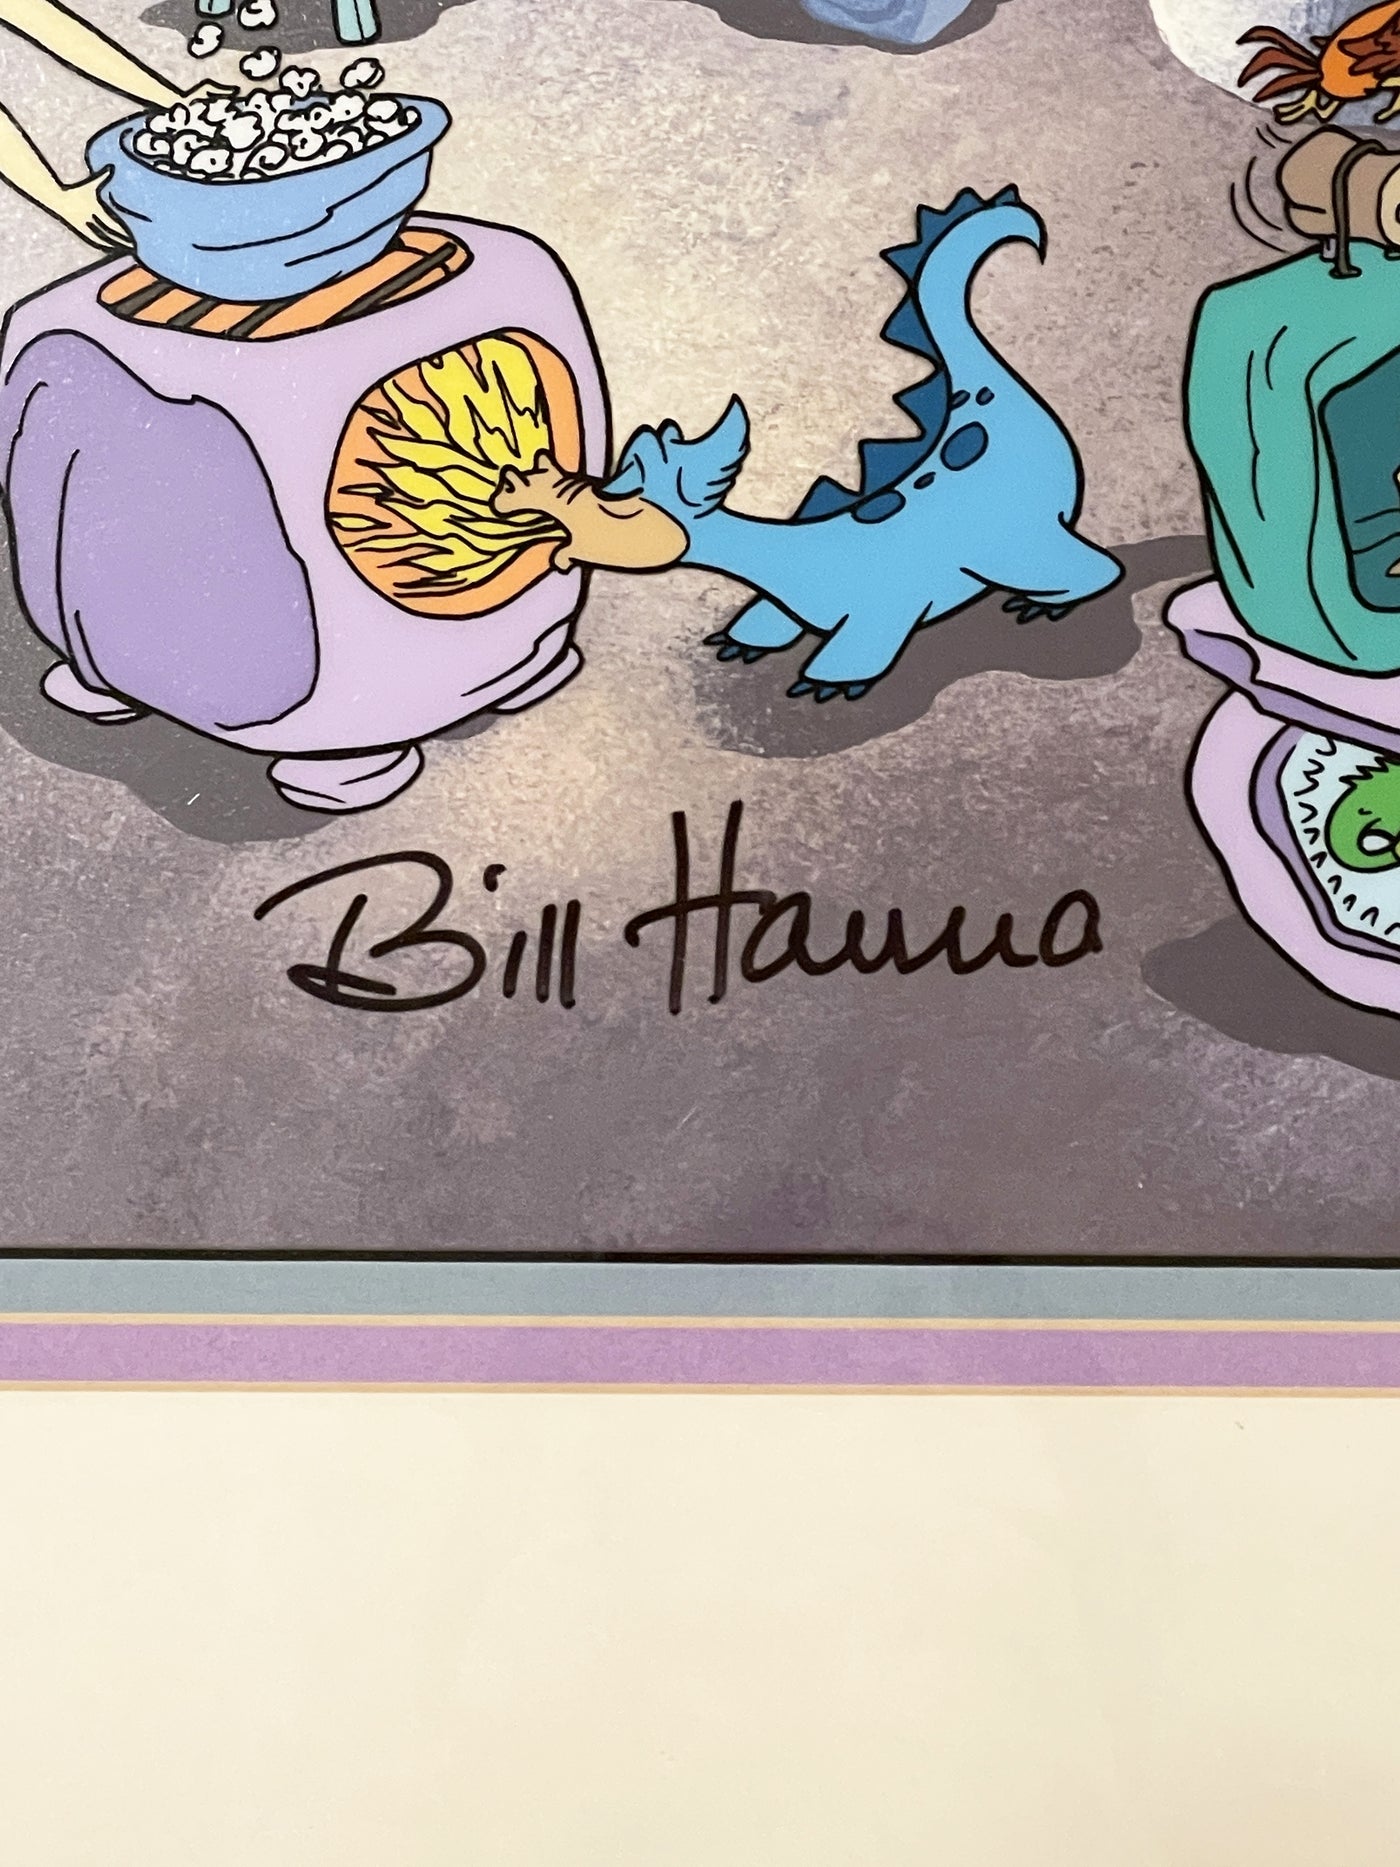 Original Hanna Barbera Limited Edition Cel, Wacky Inventions